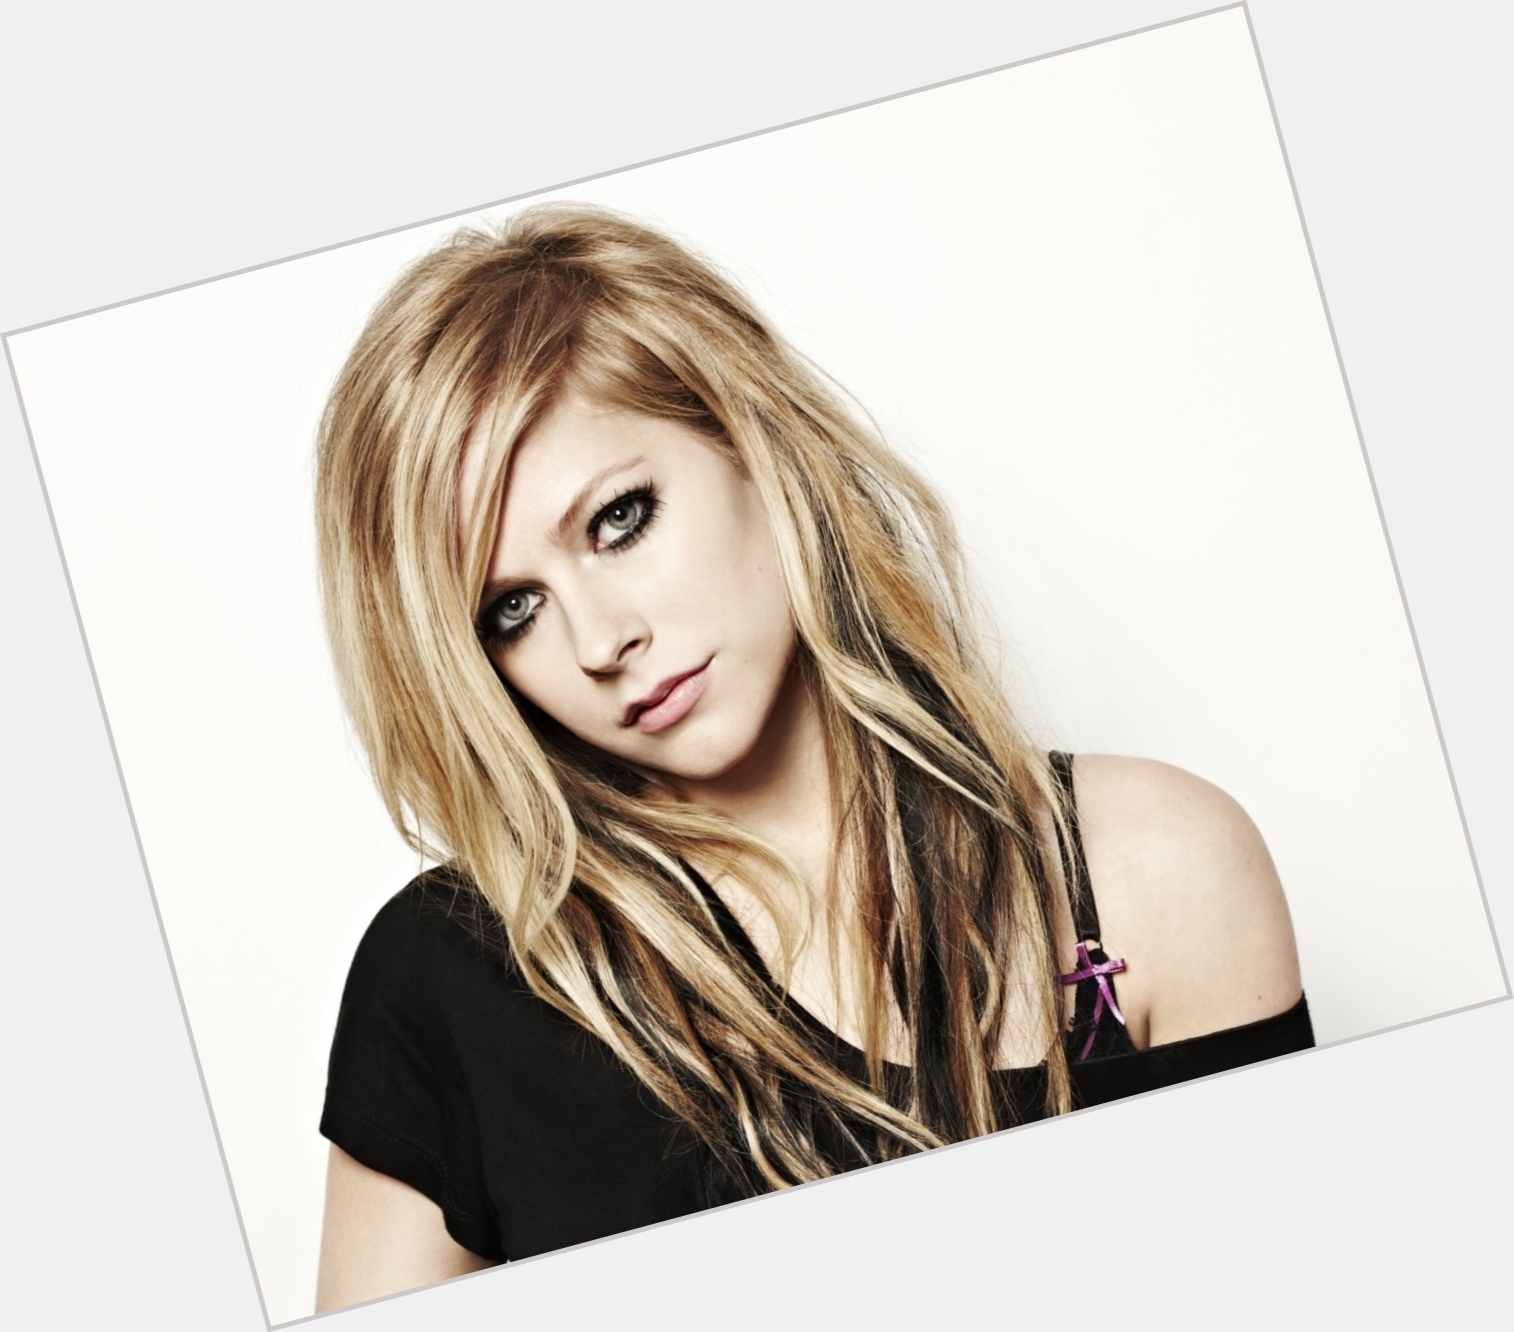 Avril Lavigne birthday 2015